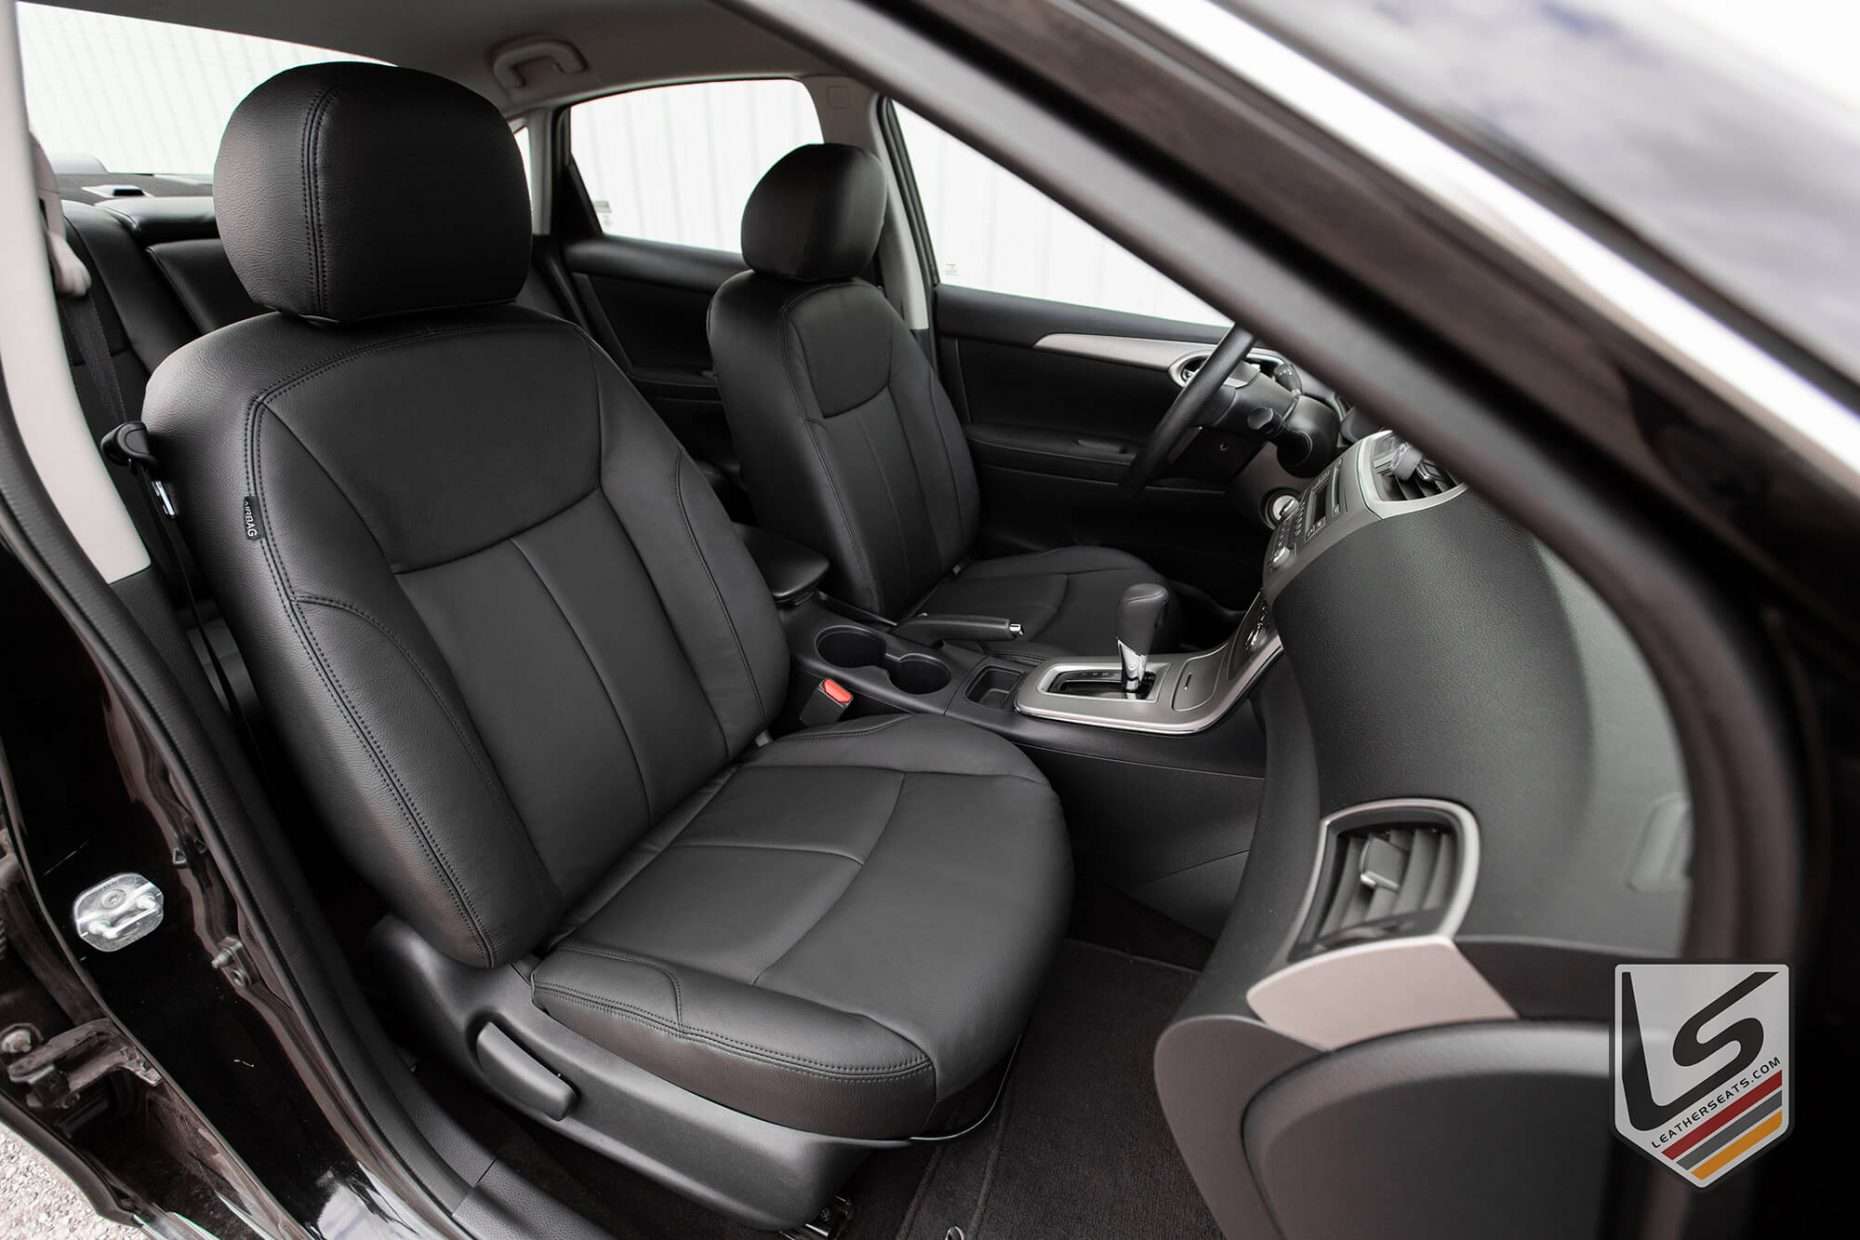 2014 Nissan Sentra Sedan with installed Black leather seats